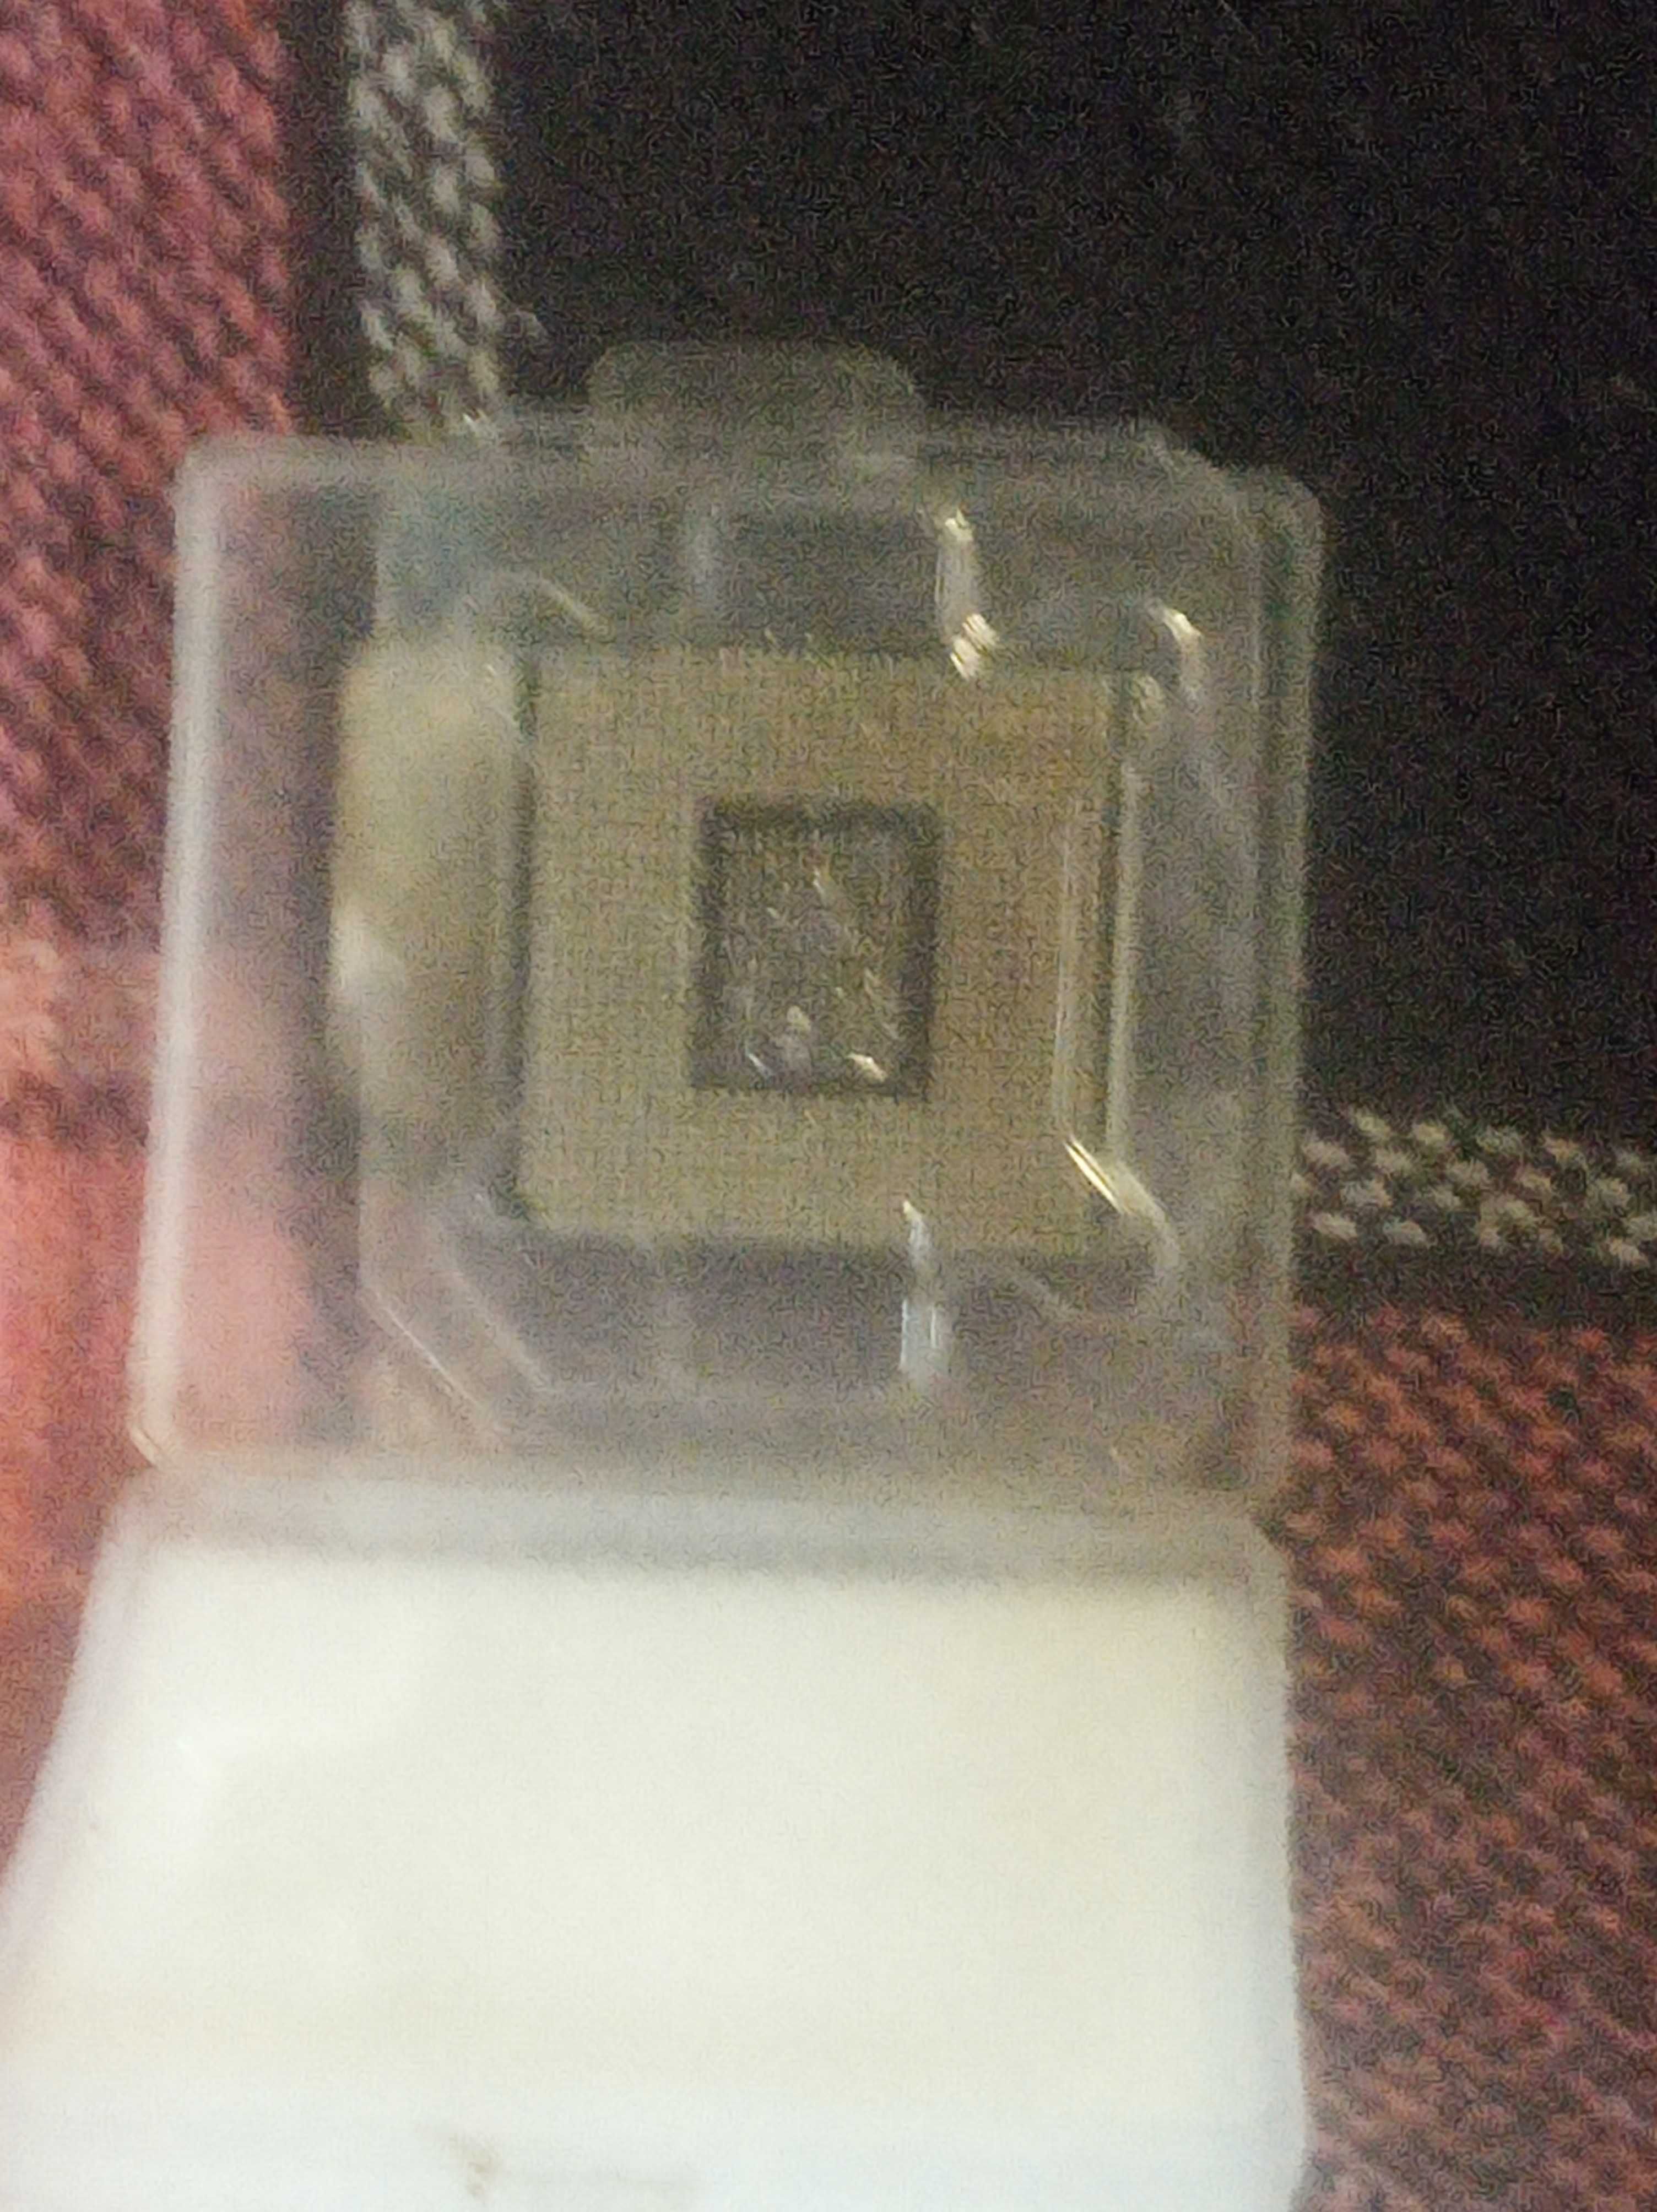 Процесор intel i7